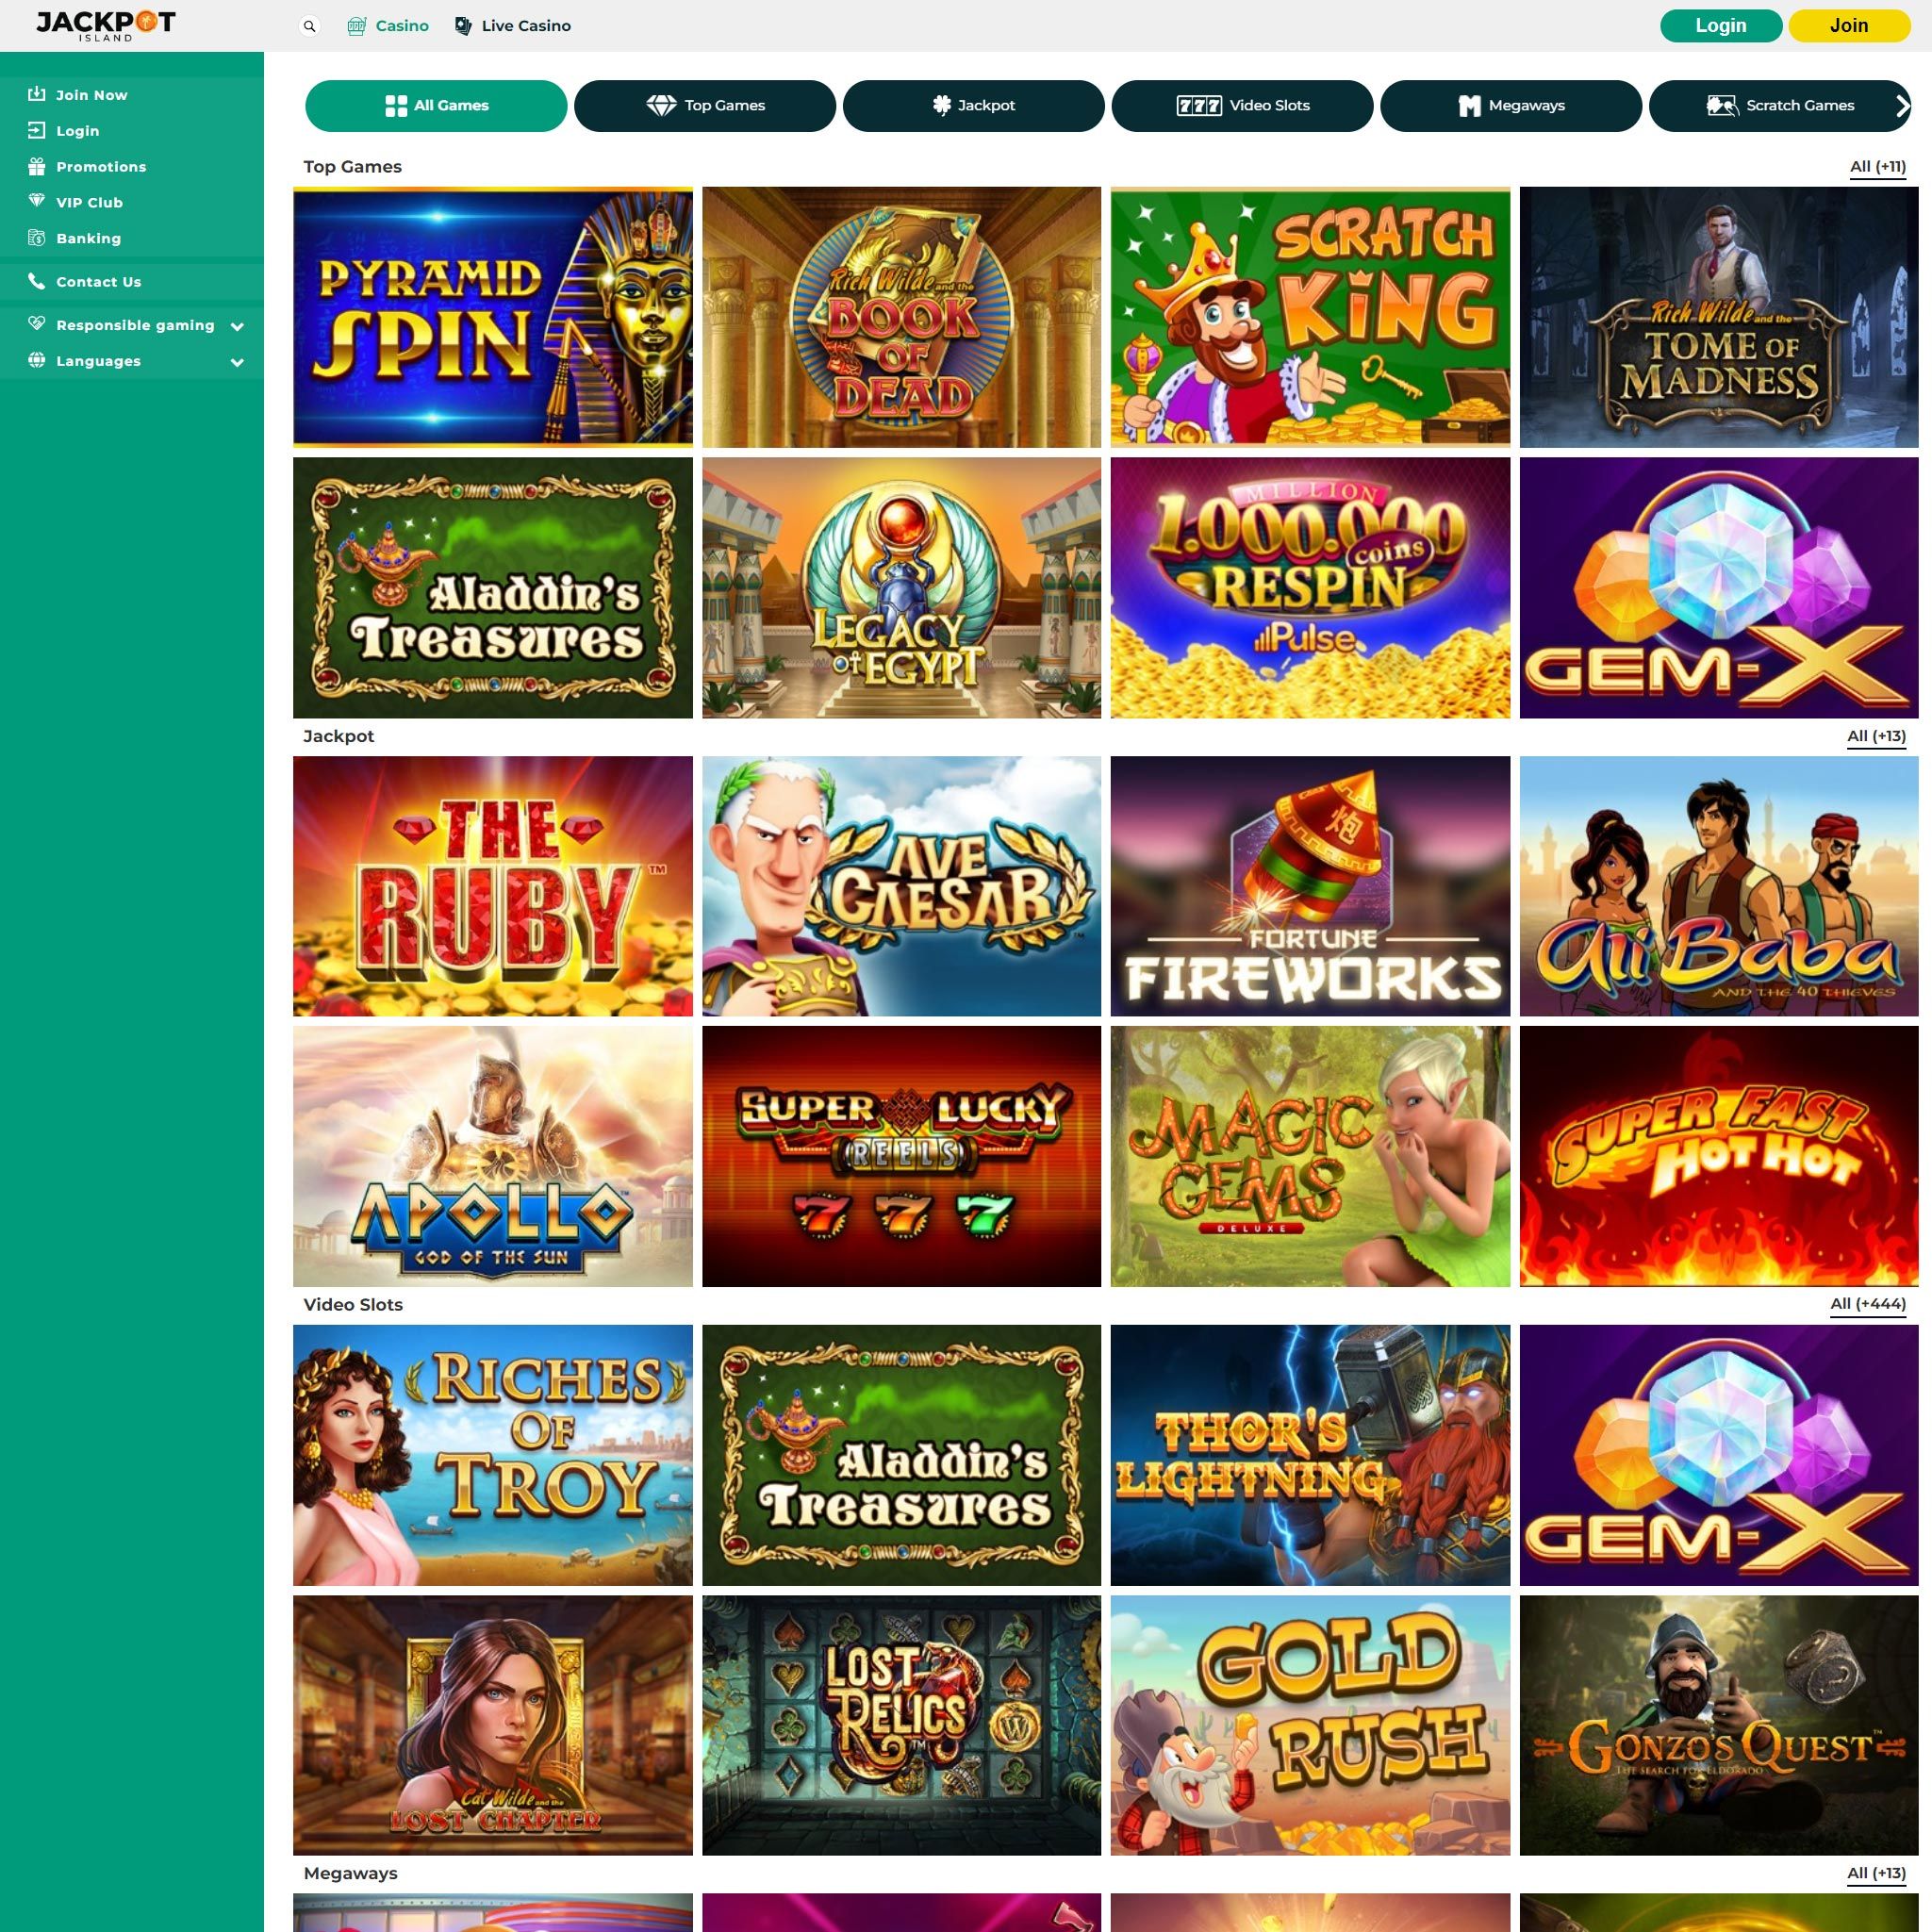 Jackpot Island Casino full games catalogue